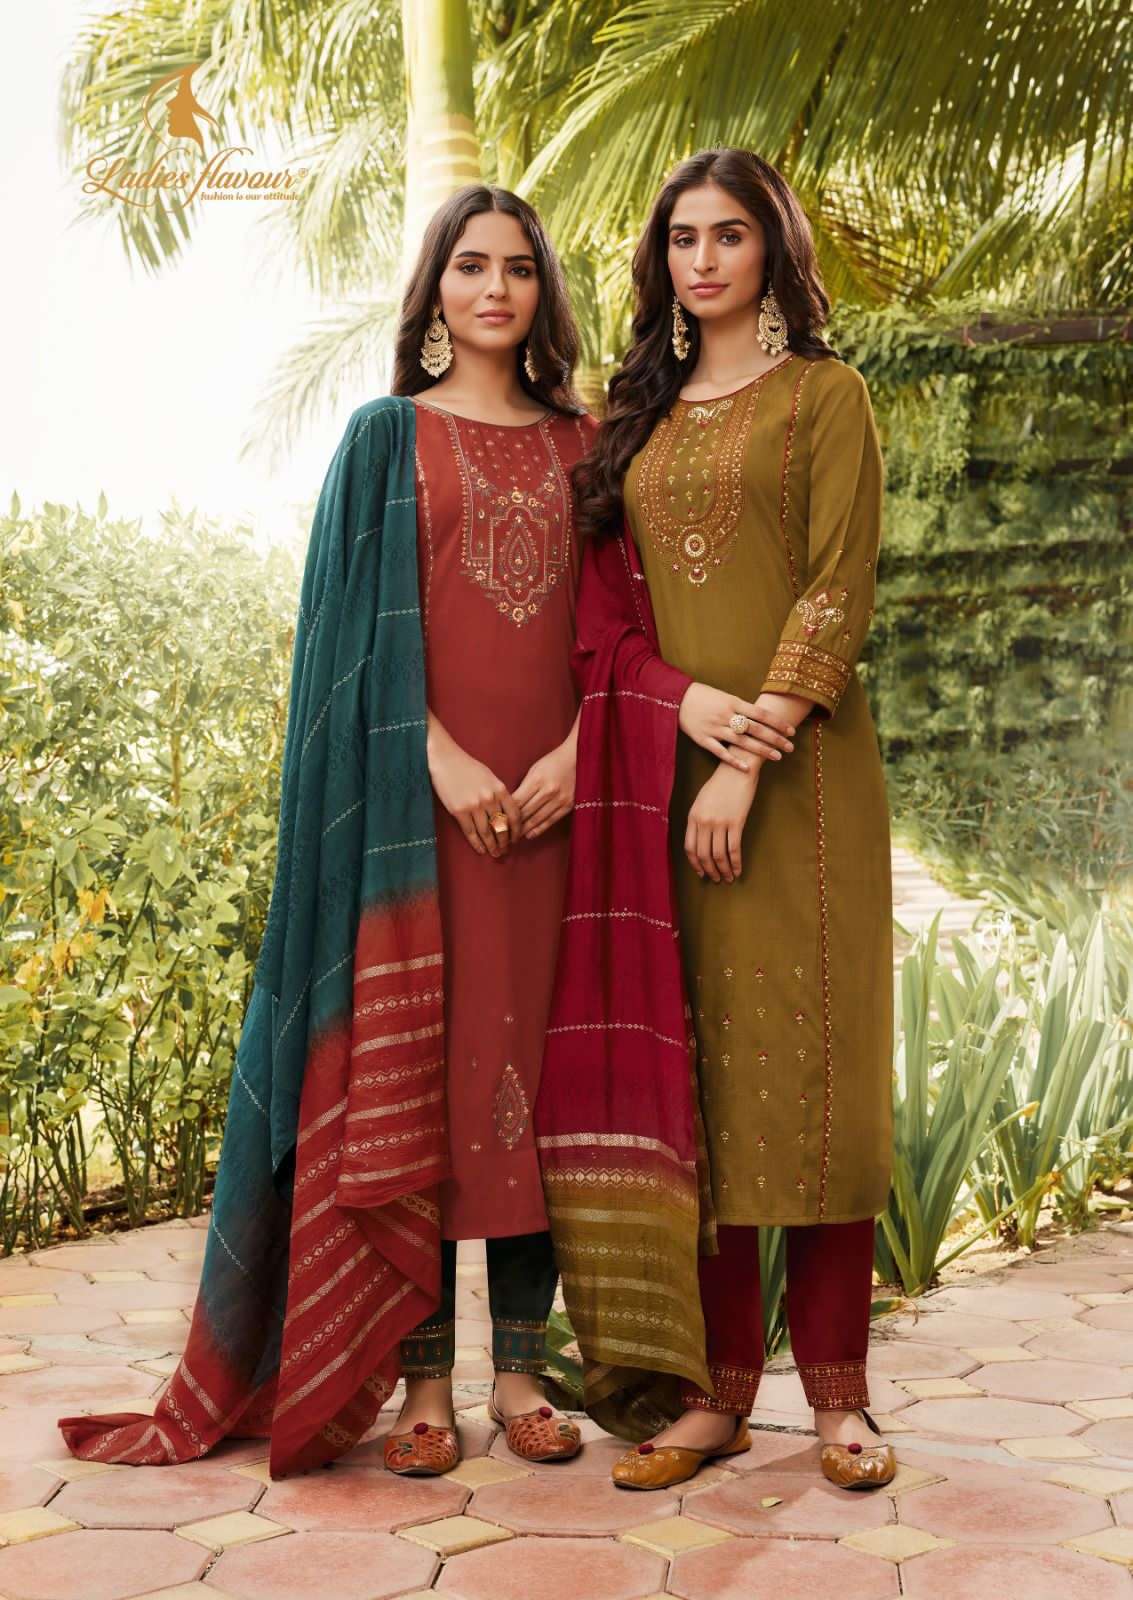 ladies flavour aarohi vol-10 1001-1004 series designer latest fancy kurti set wholesaler surat gujarat